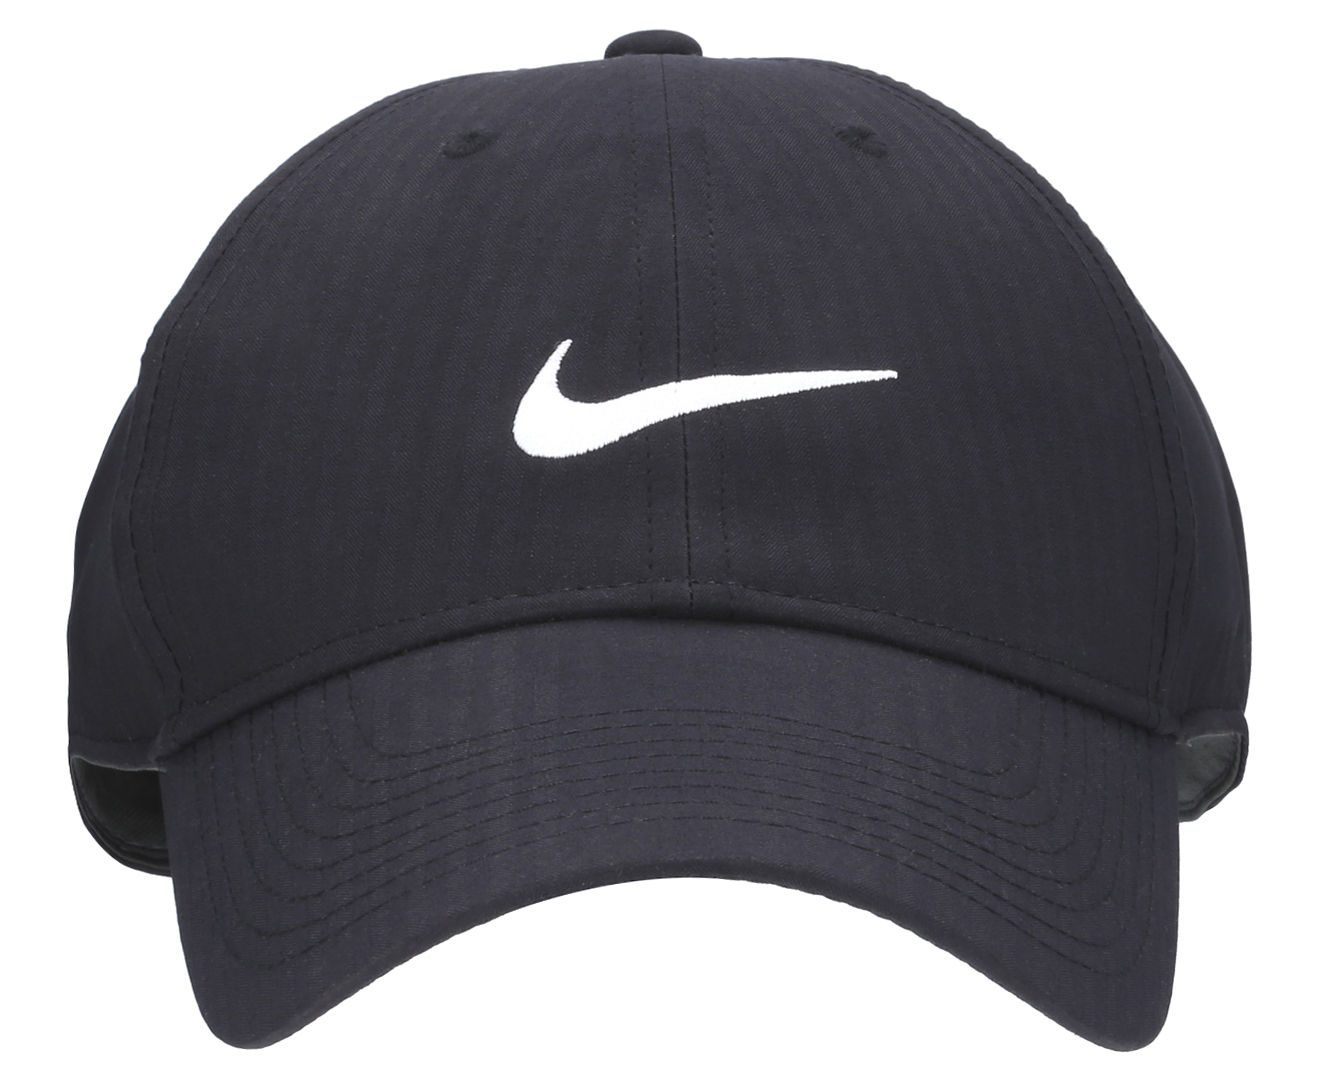 Nike Unisex Legacy 91 Golf Cap - Black/Anthracite | Catch.com.au